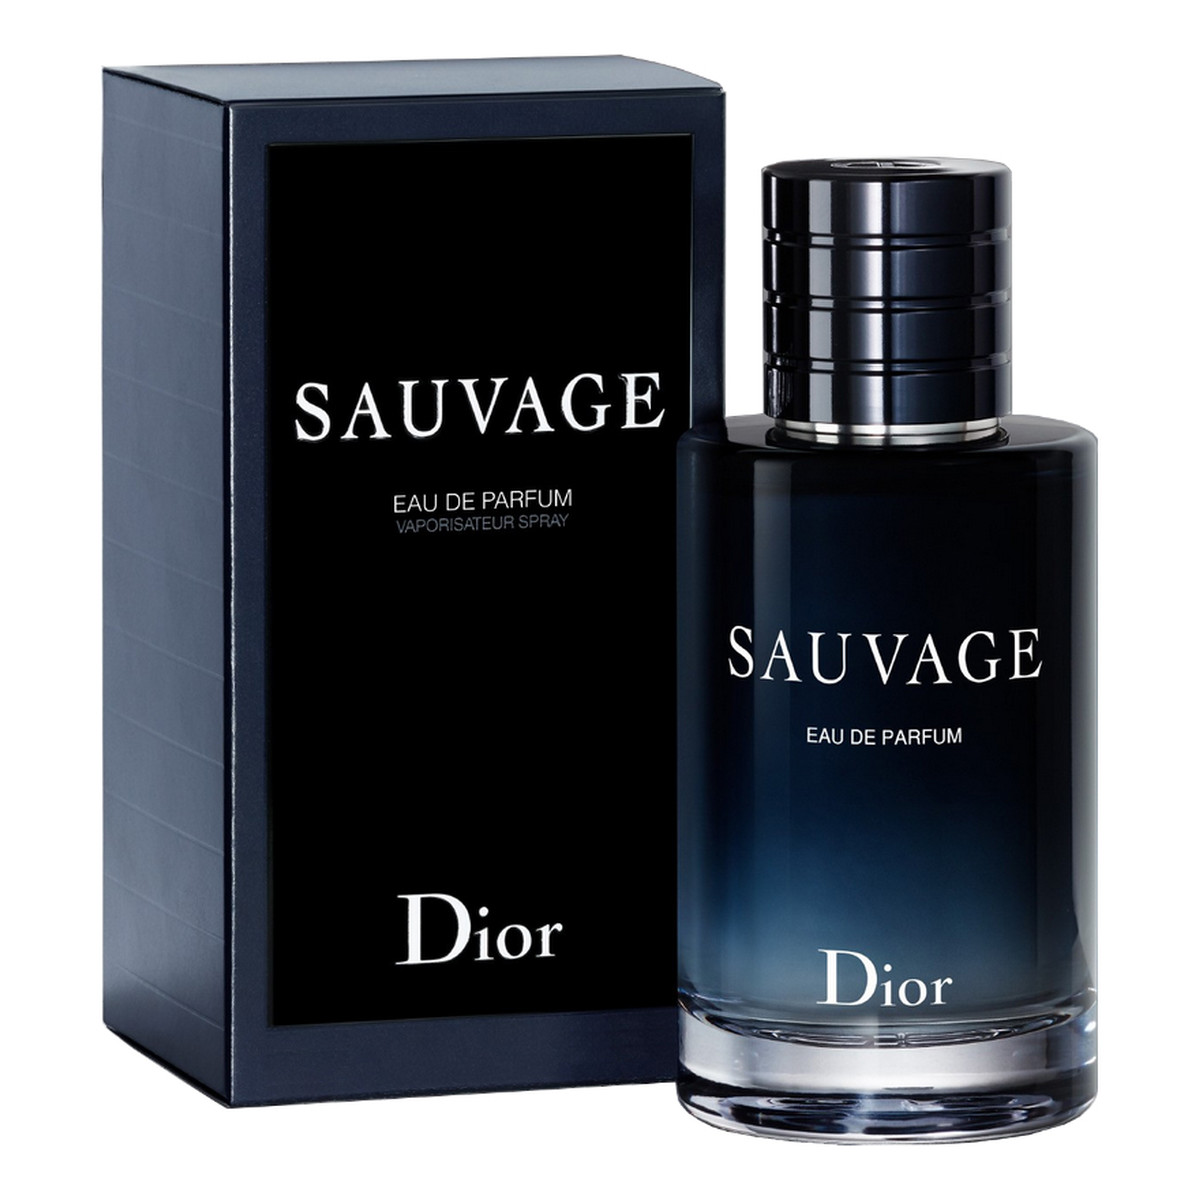 Dior Eau Sauvage woda perfumowana 60ml